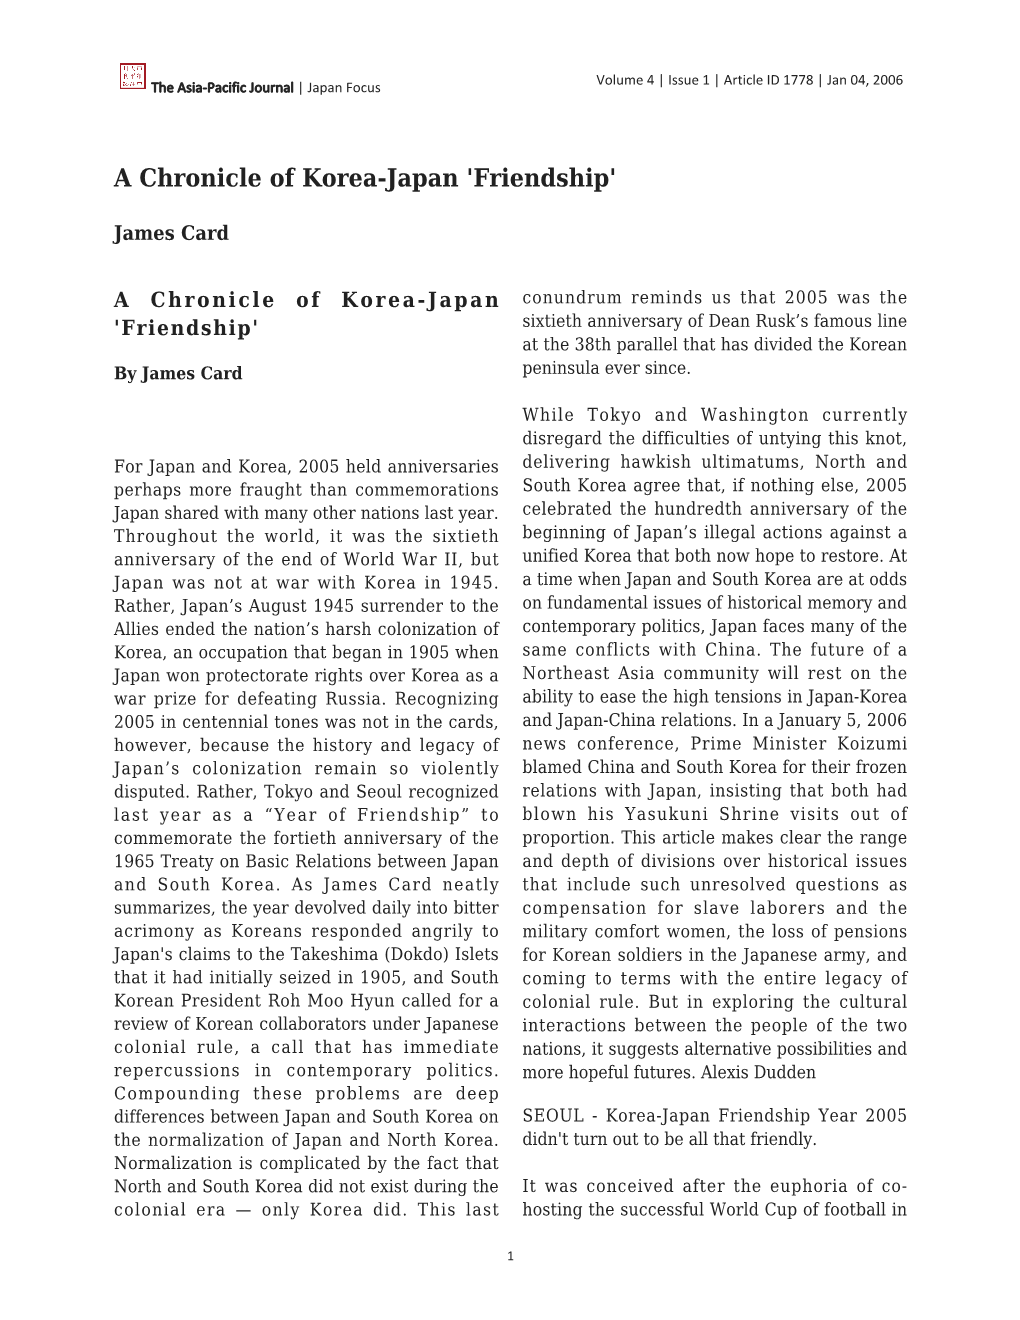 A Chronicle of Korea-Japan 'Friendship'